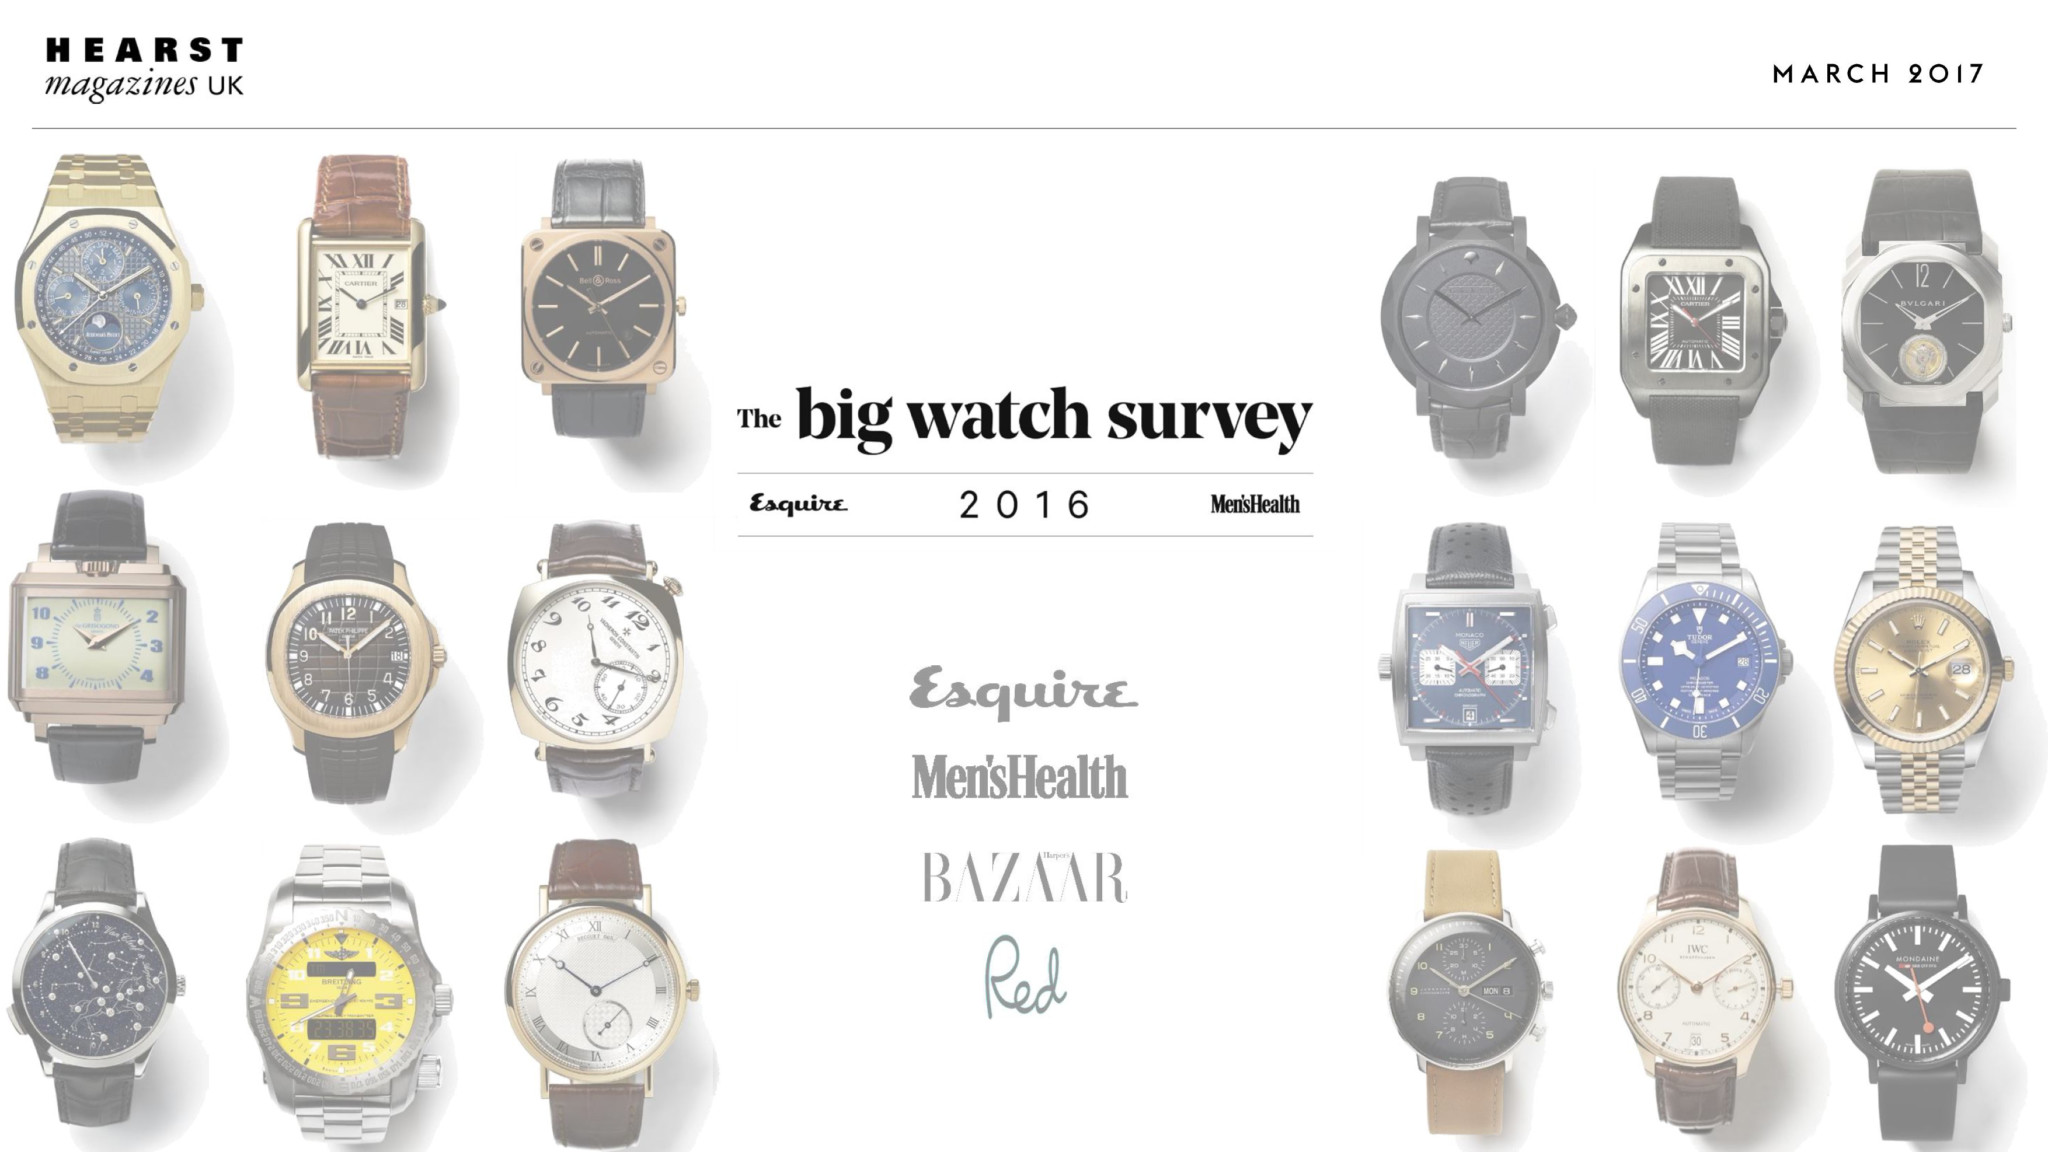 The big watch survey 2016